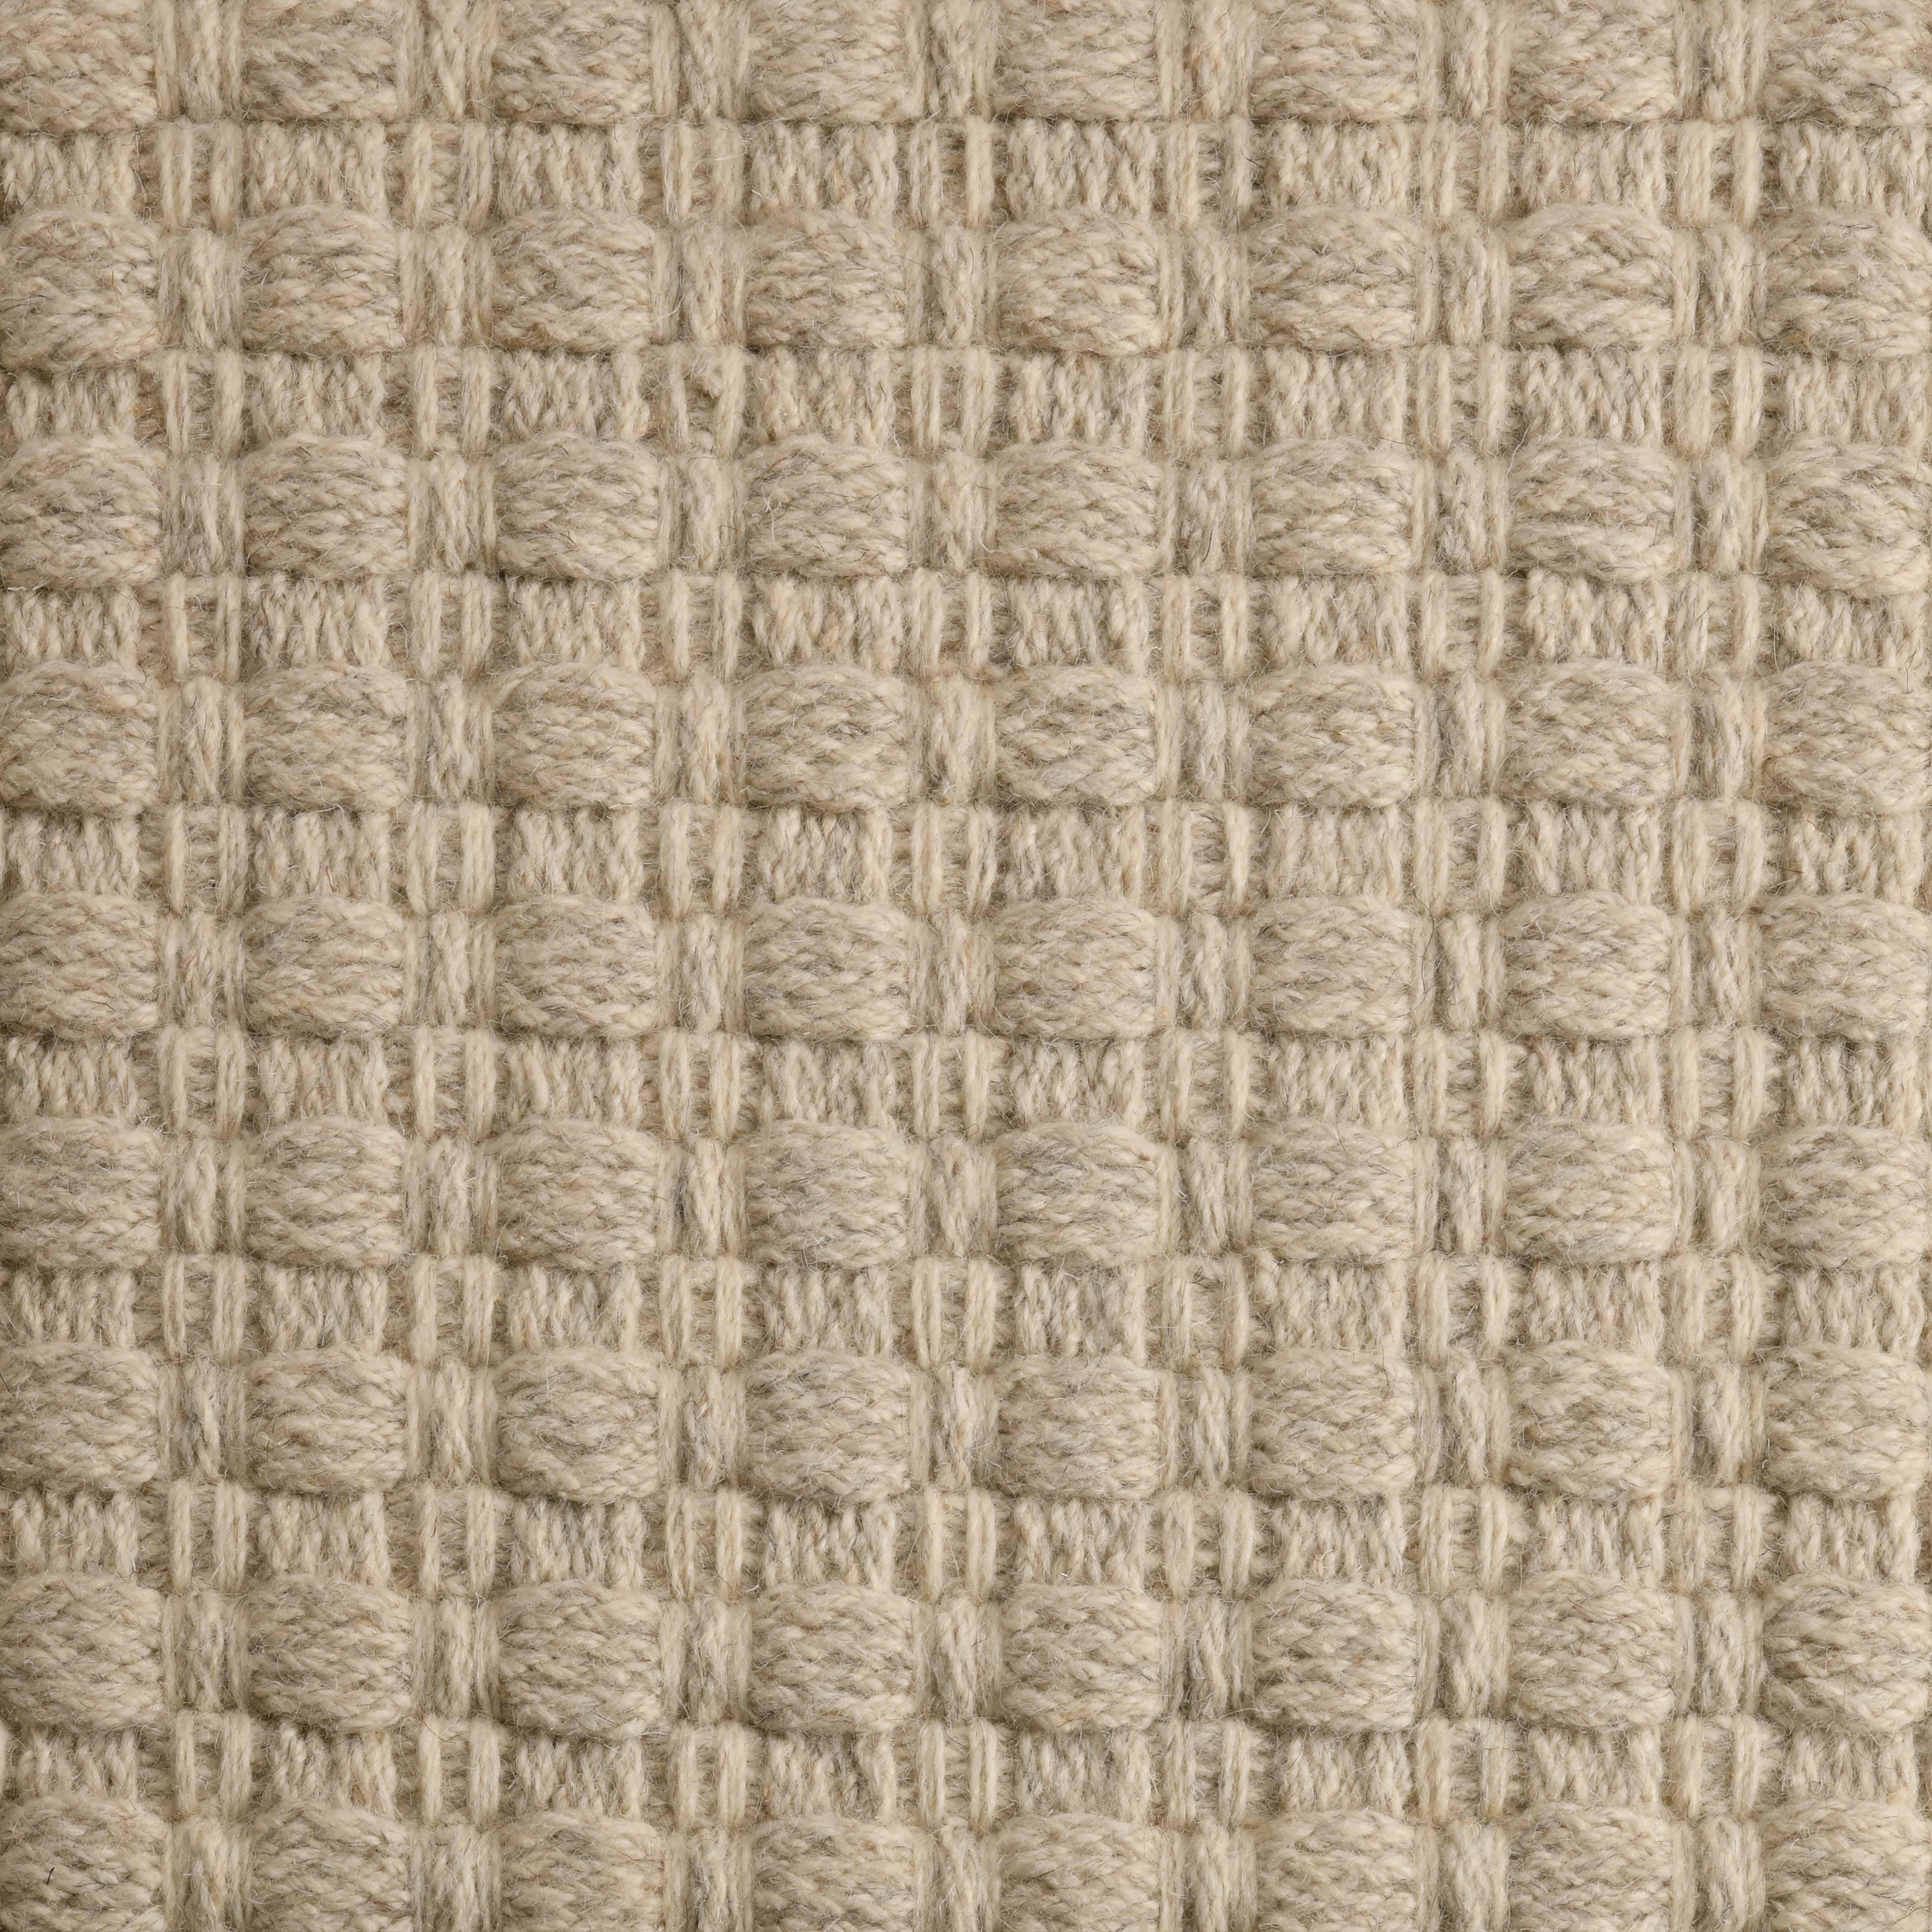 Una, Ash, Handwoven Face 60% Undyed NZ Wool, 40% Undyed MED Wool, 8' x 10'